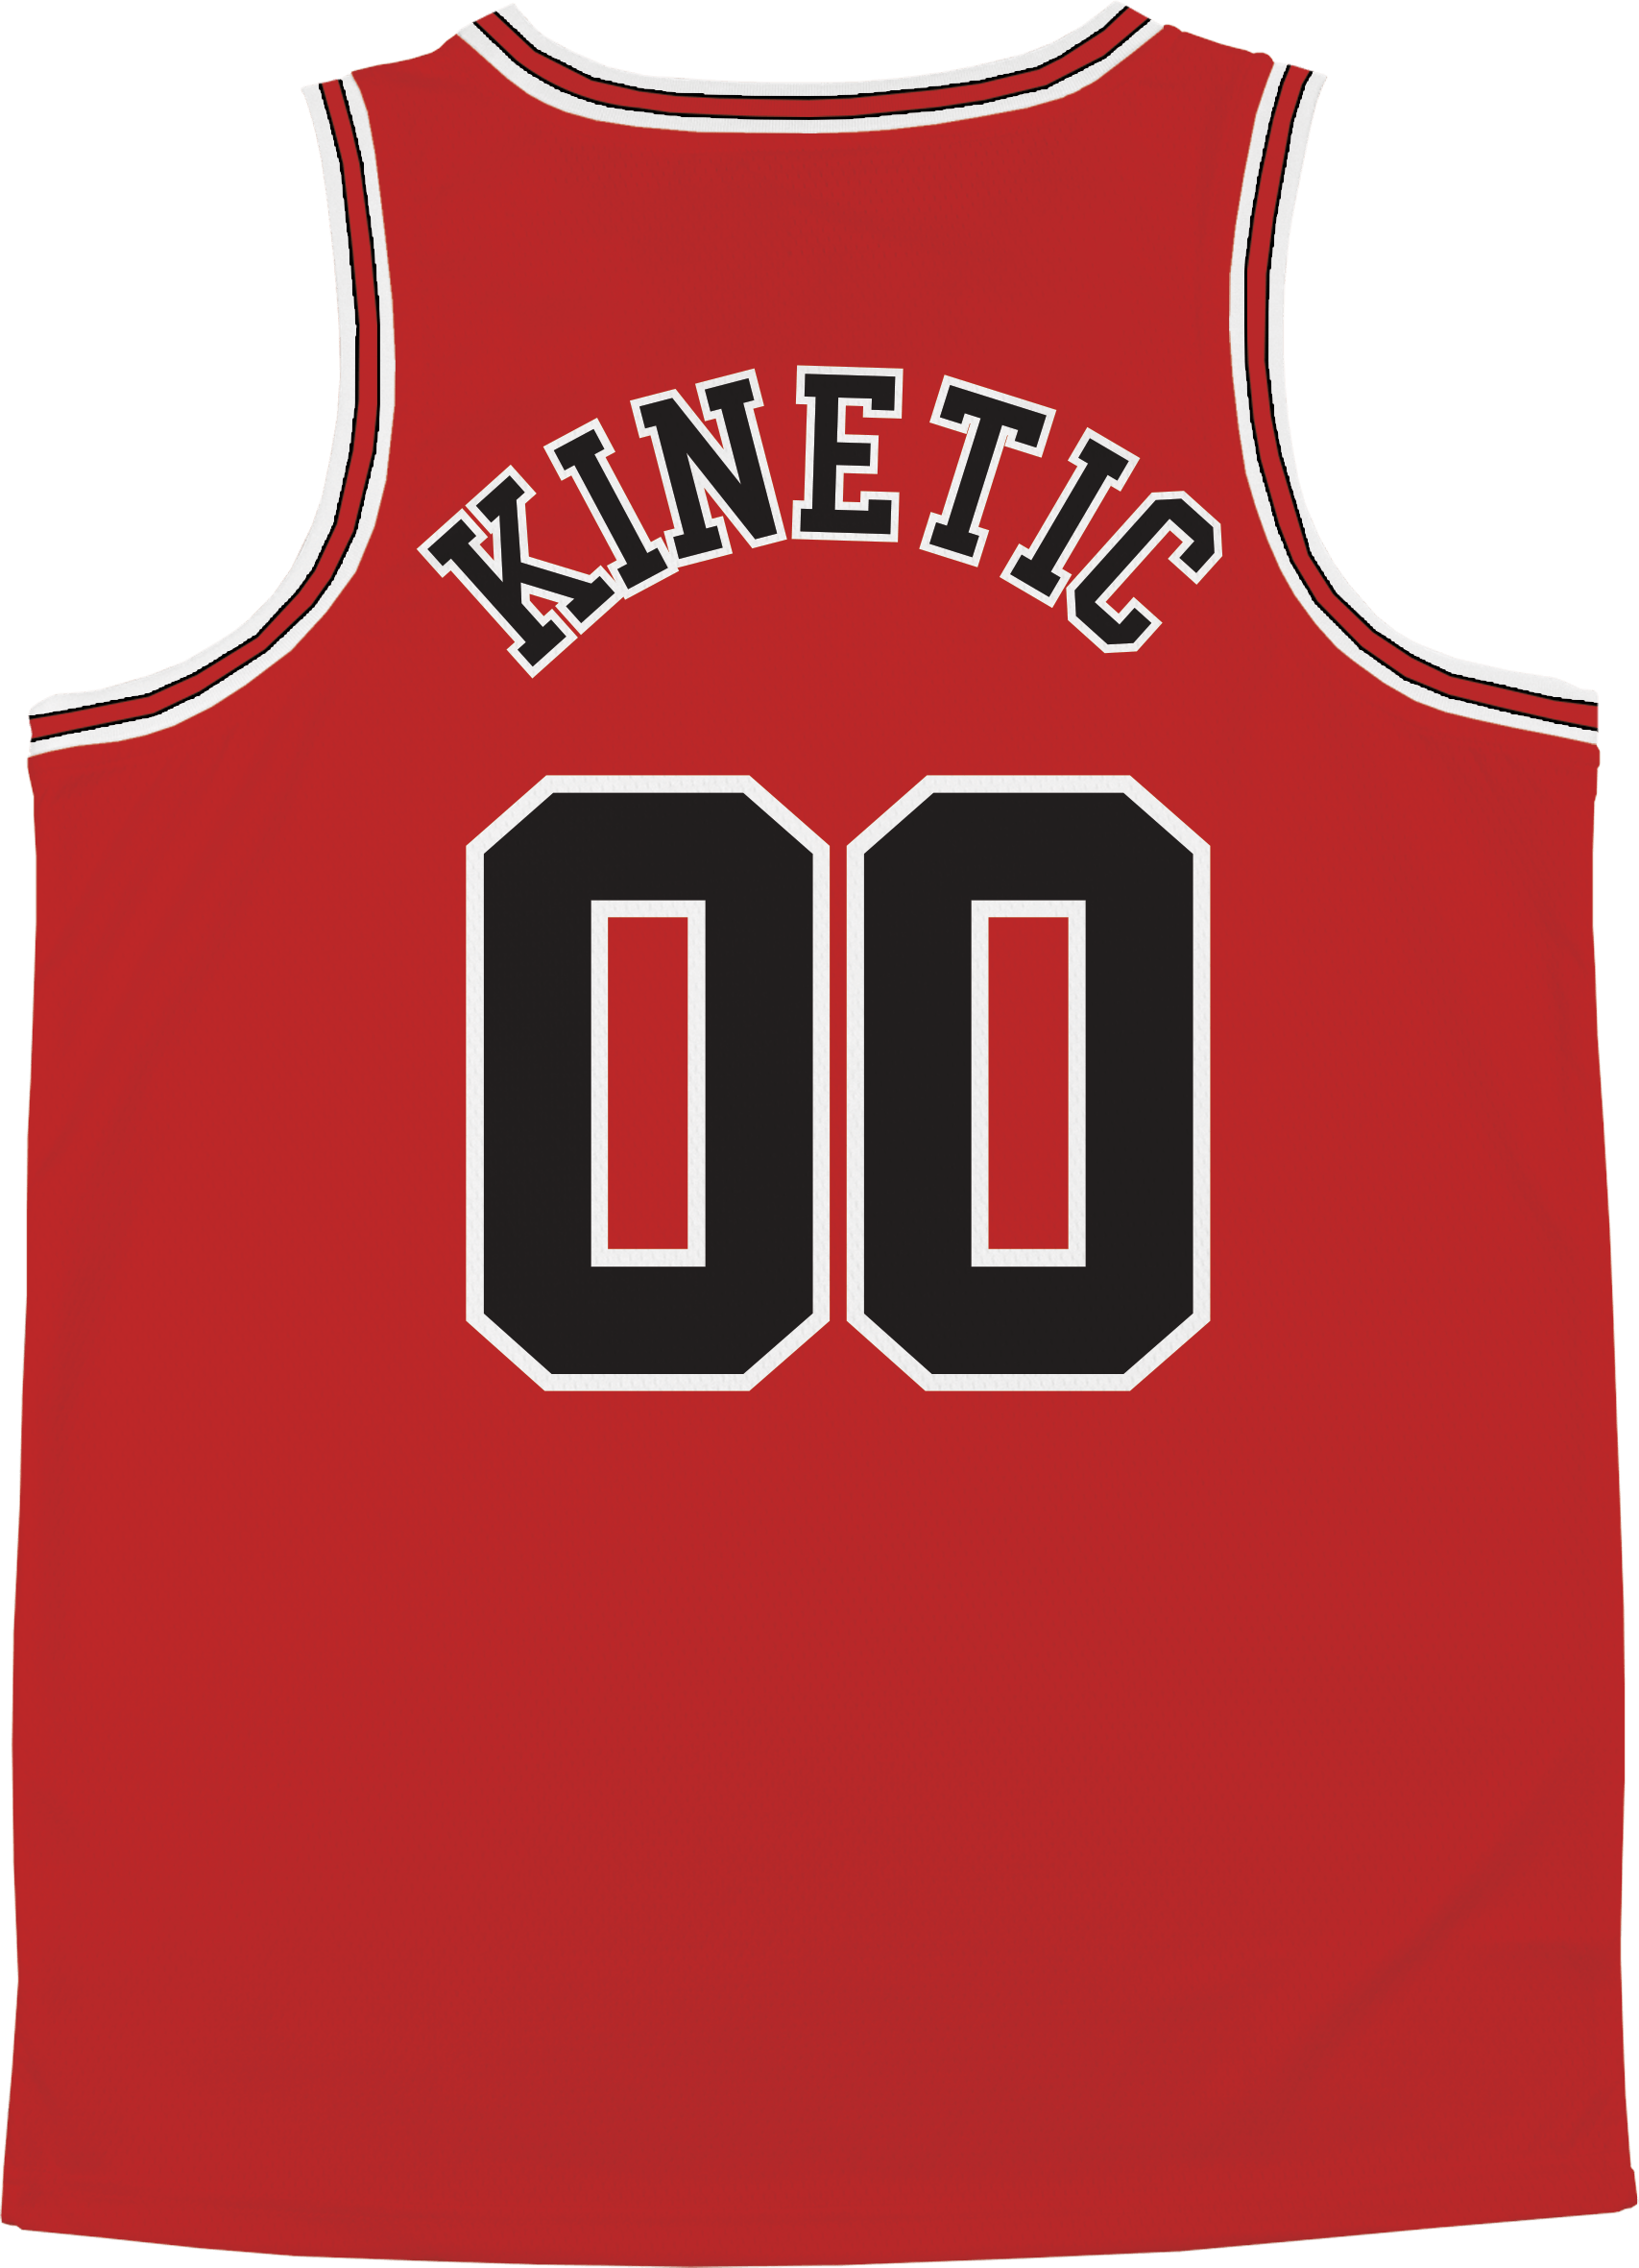 Phi Delta Theta - Big Red Basketball Jersey - Kinetic Society